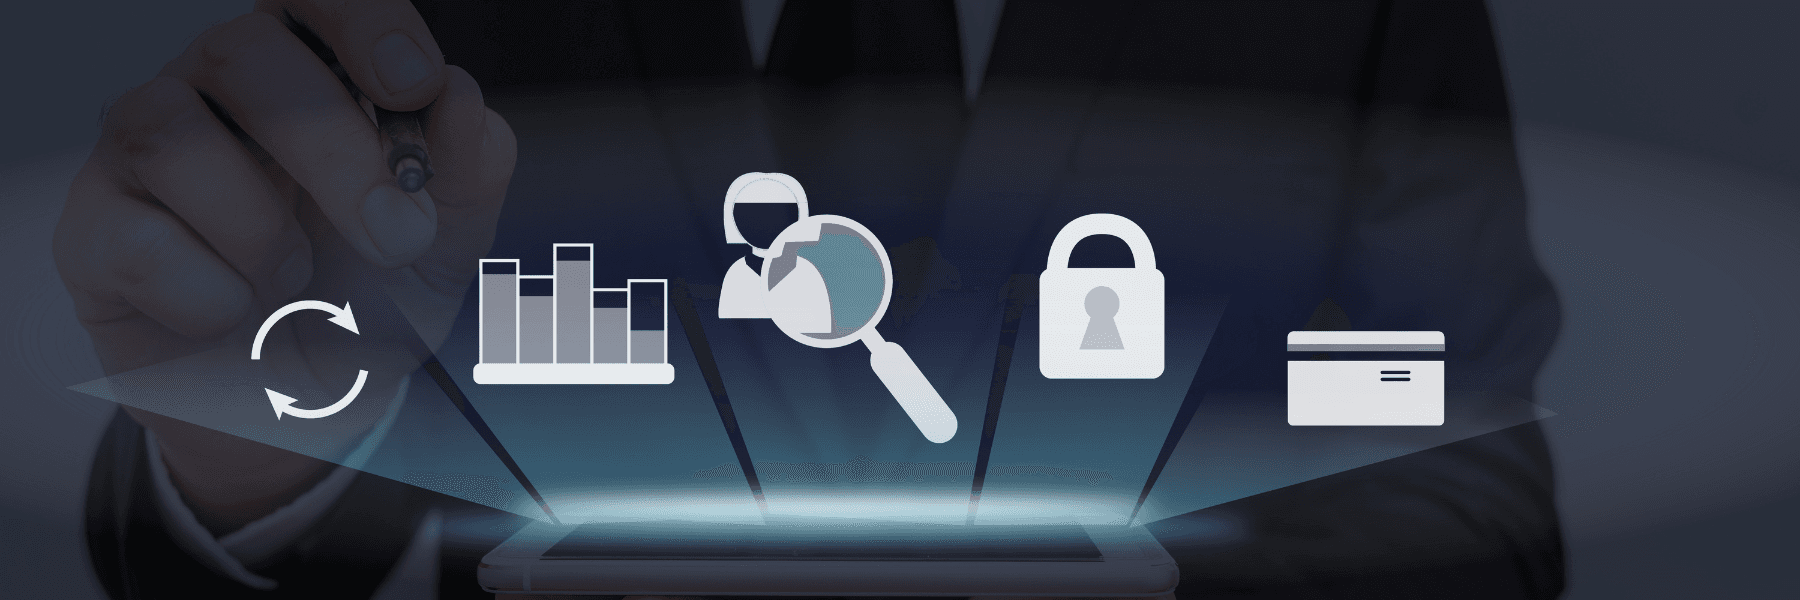 Safely Sharing Information Online: Best Practices for Digital Profile Security